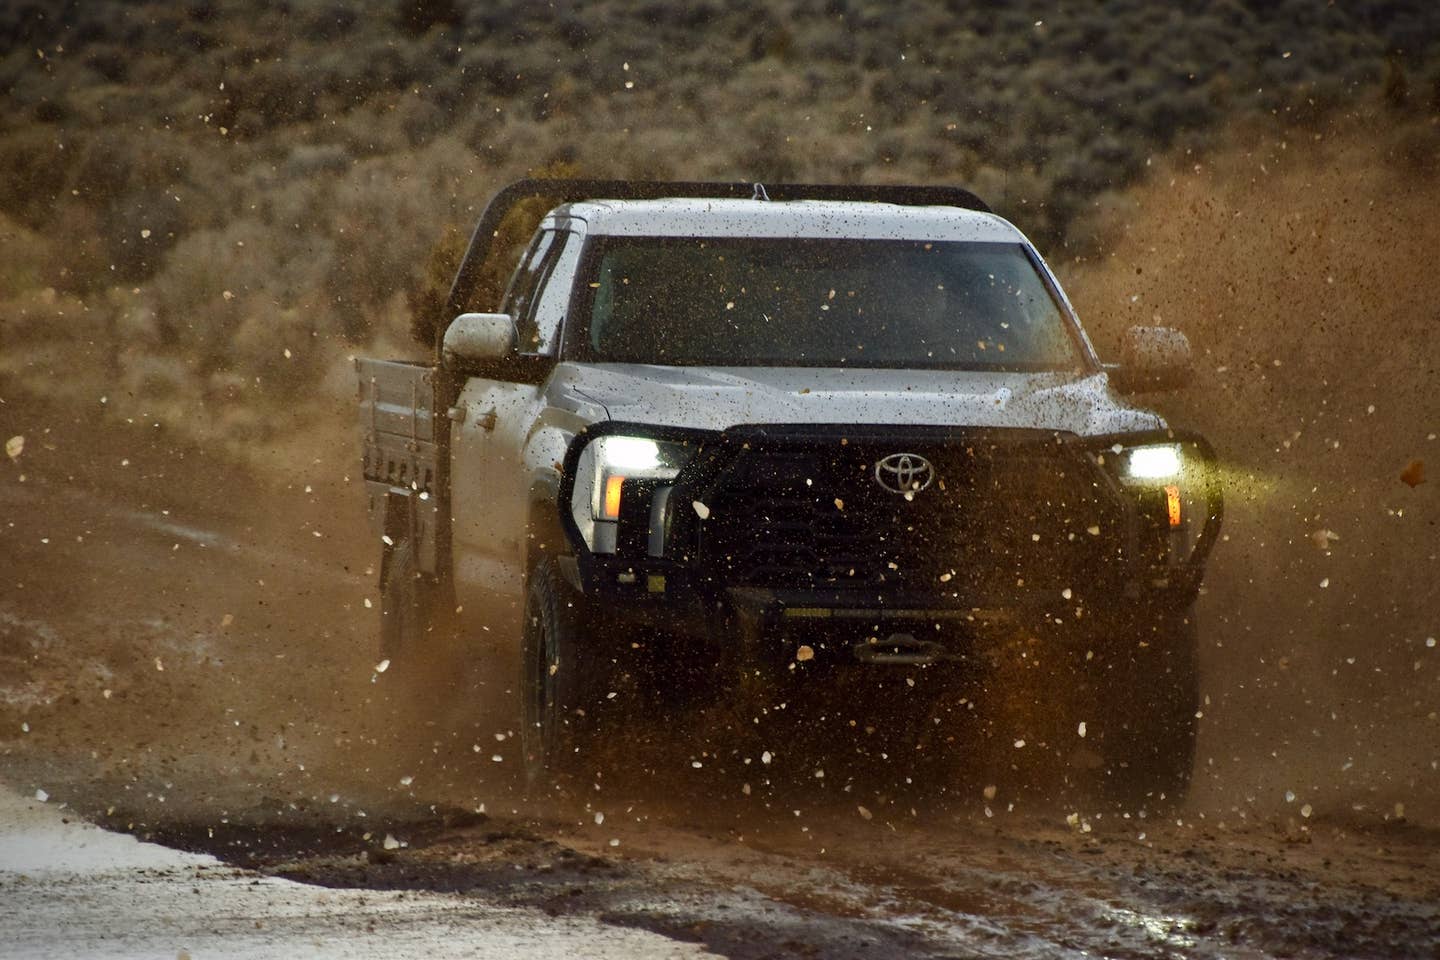 A Toyota Tundra splashes through mud at high speed